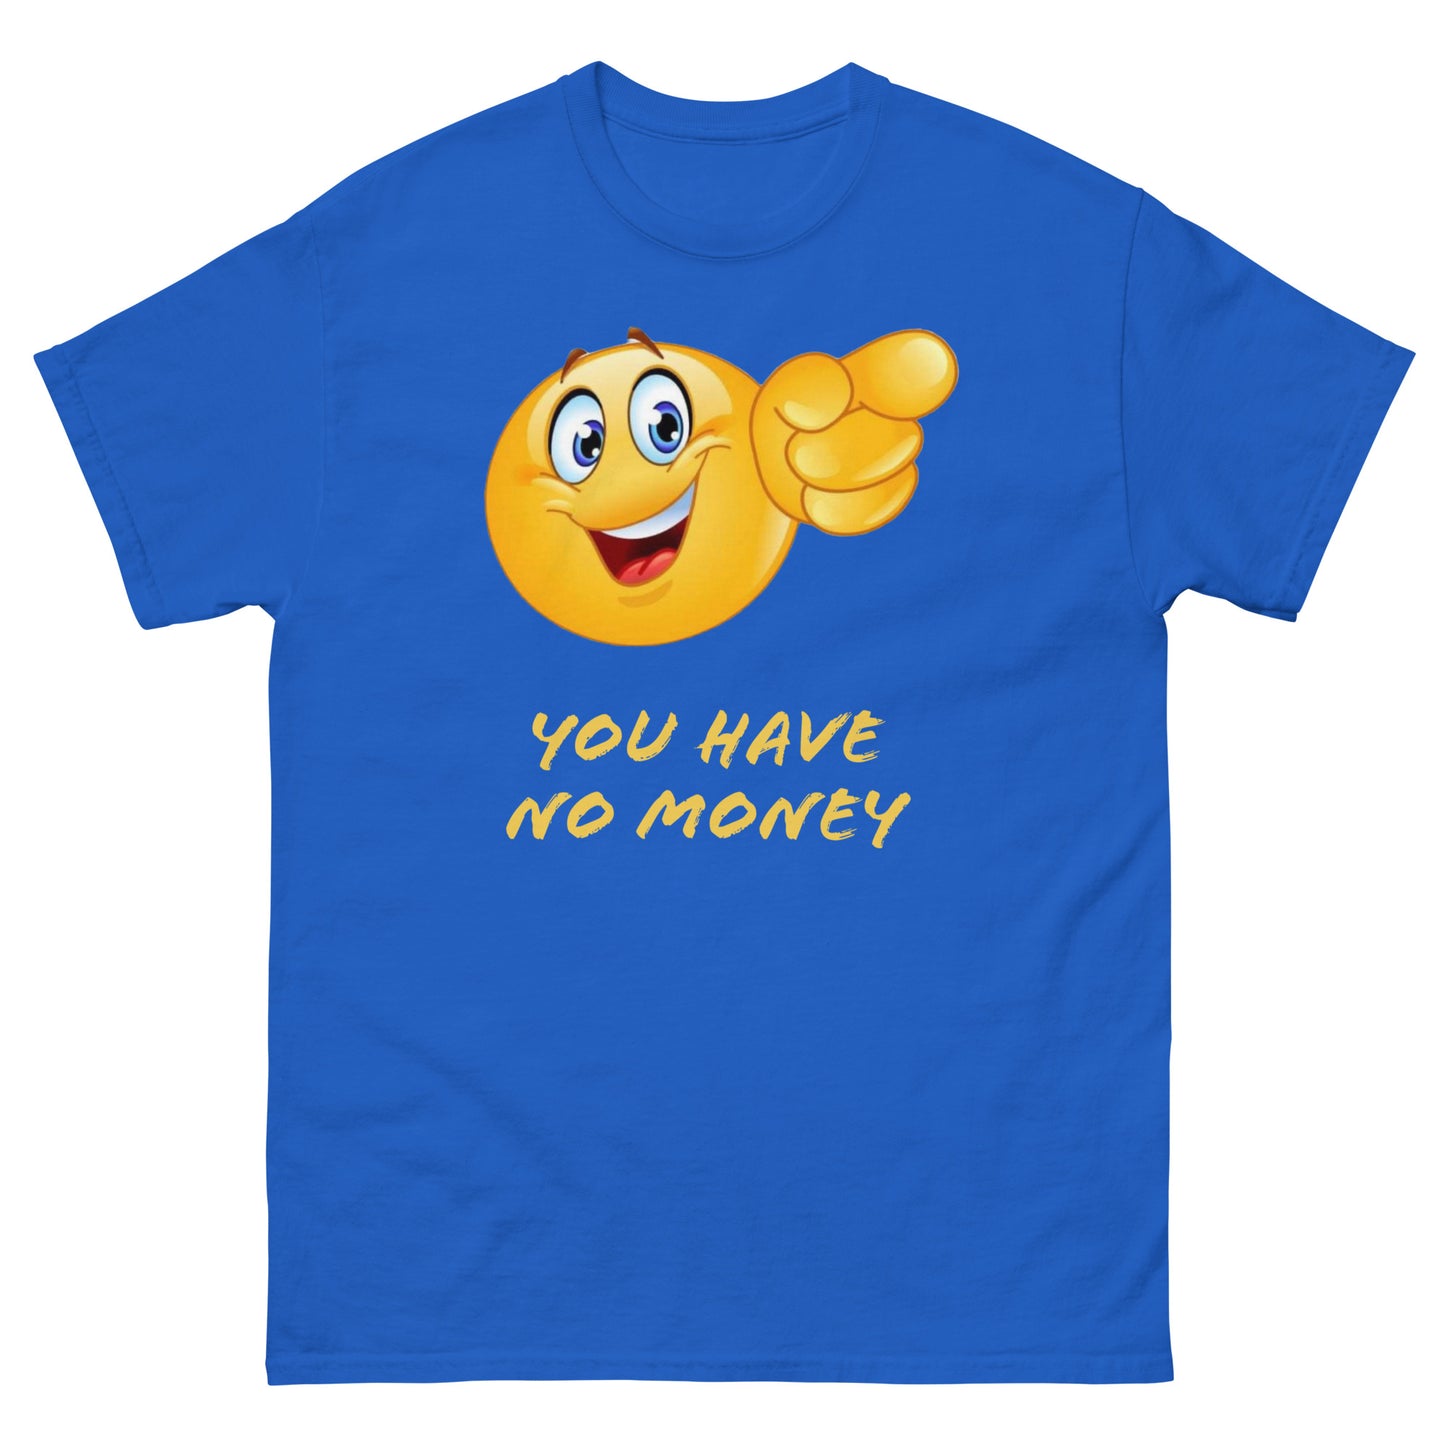 You have no money